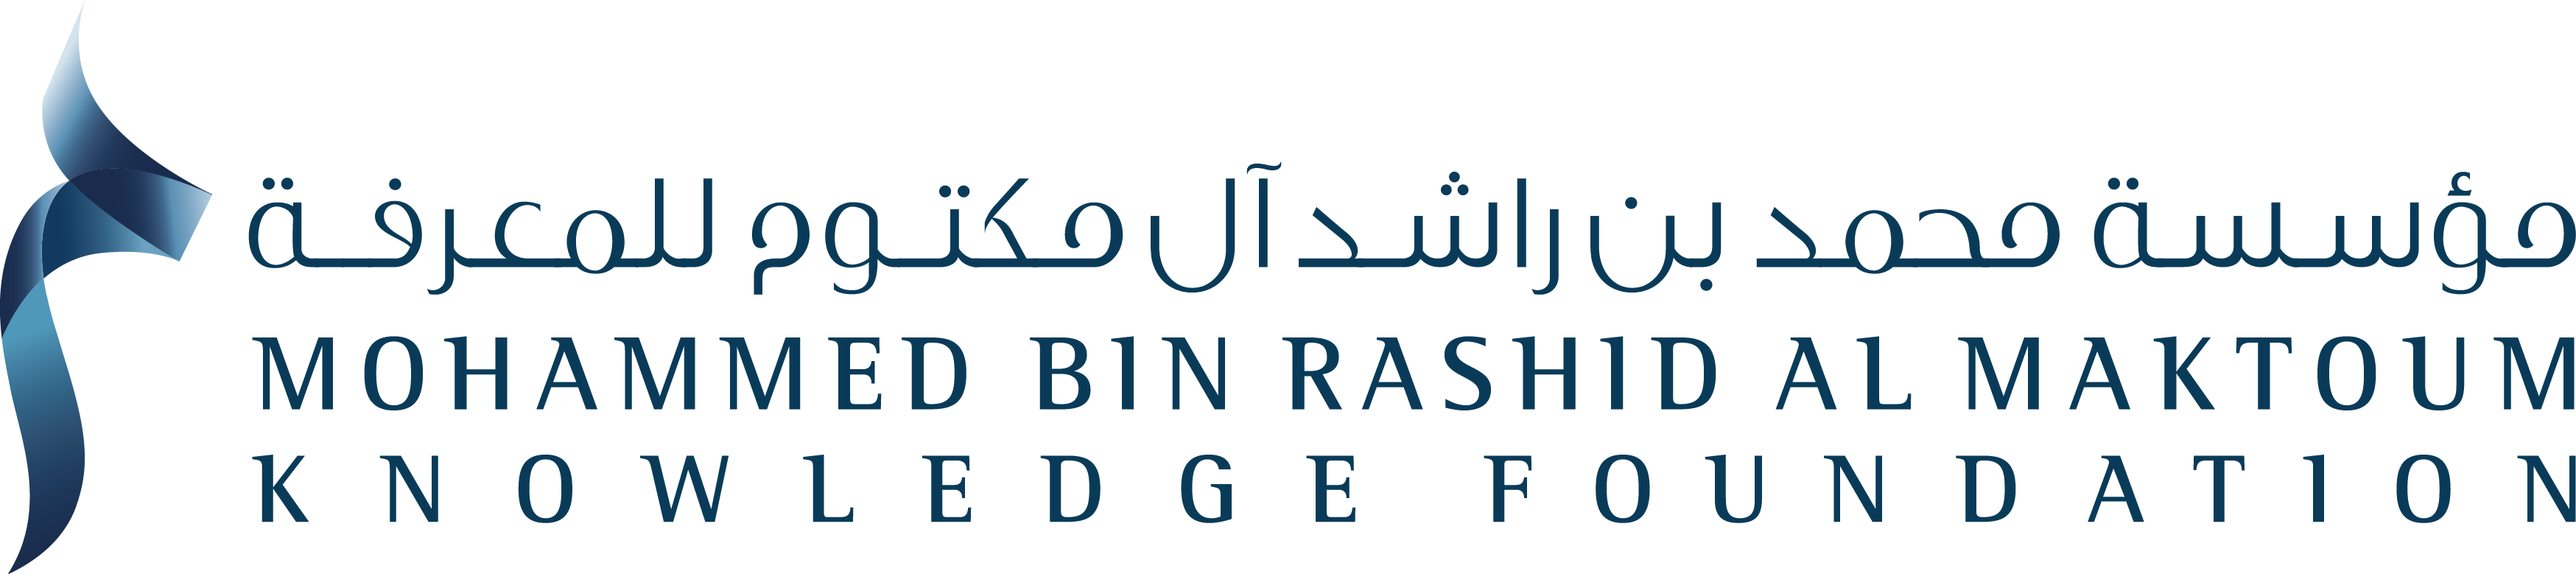 Mohammed Bin Rashid Al Maktoum Knowledge Foundation